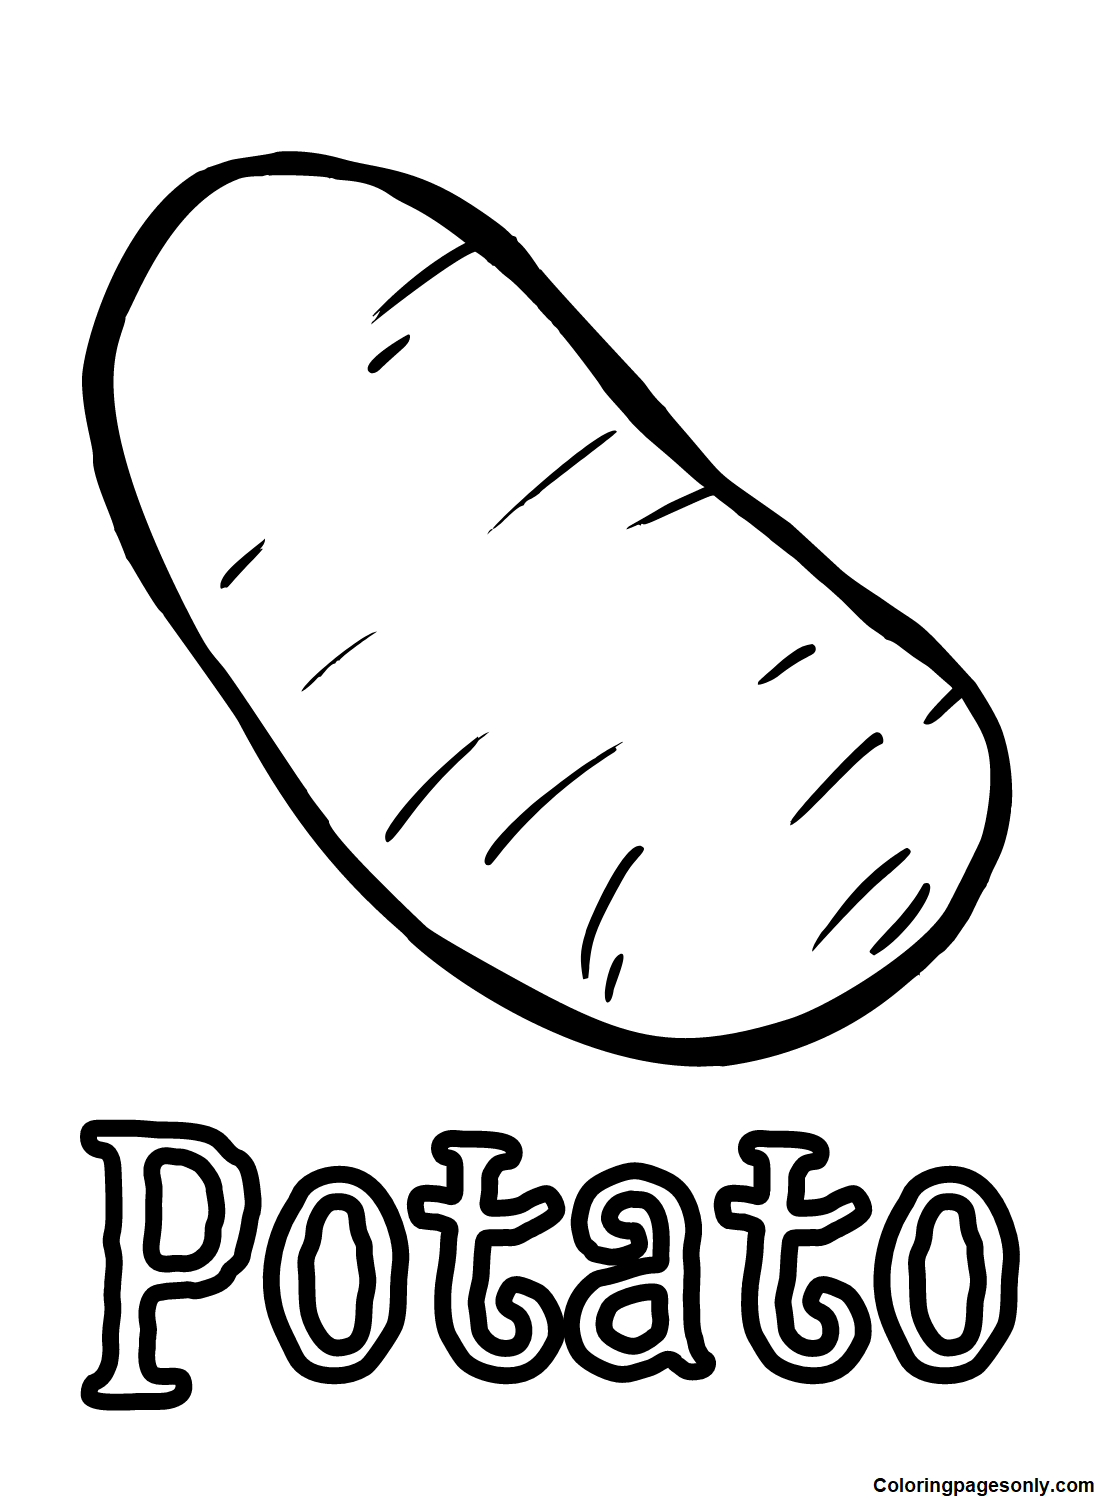 Free Potato from Potato